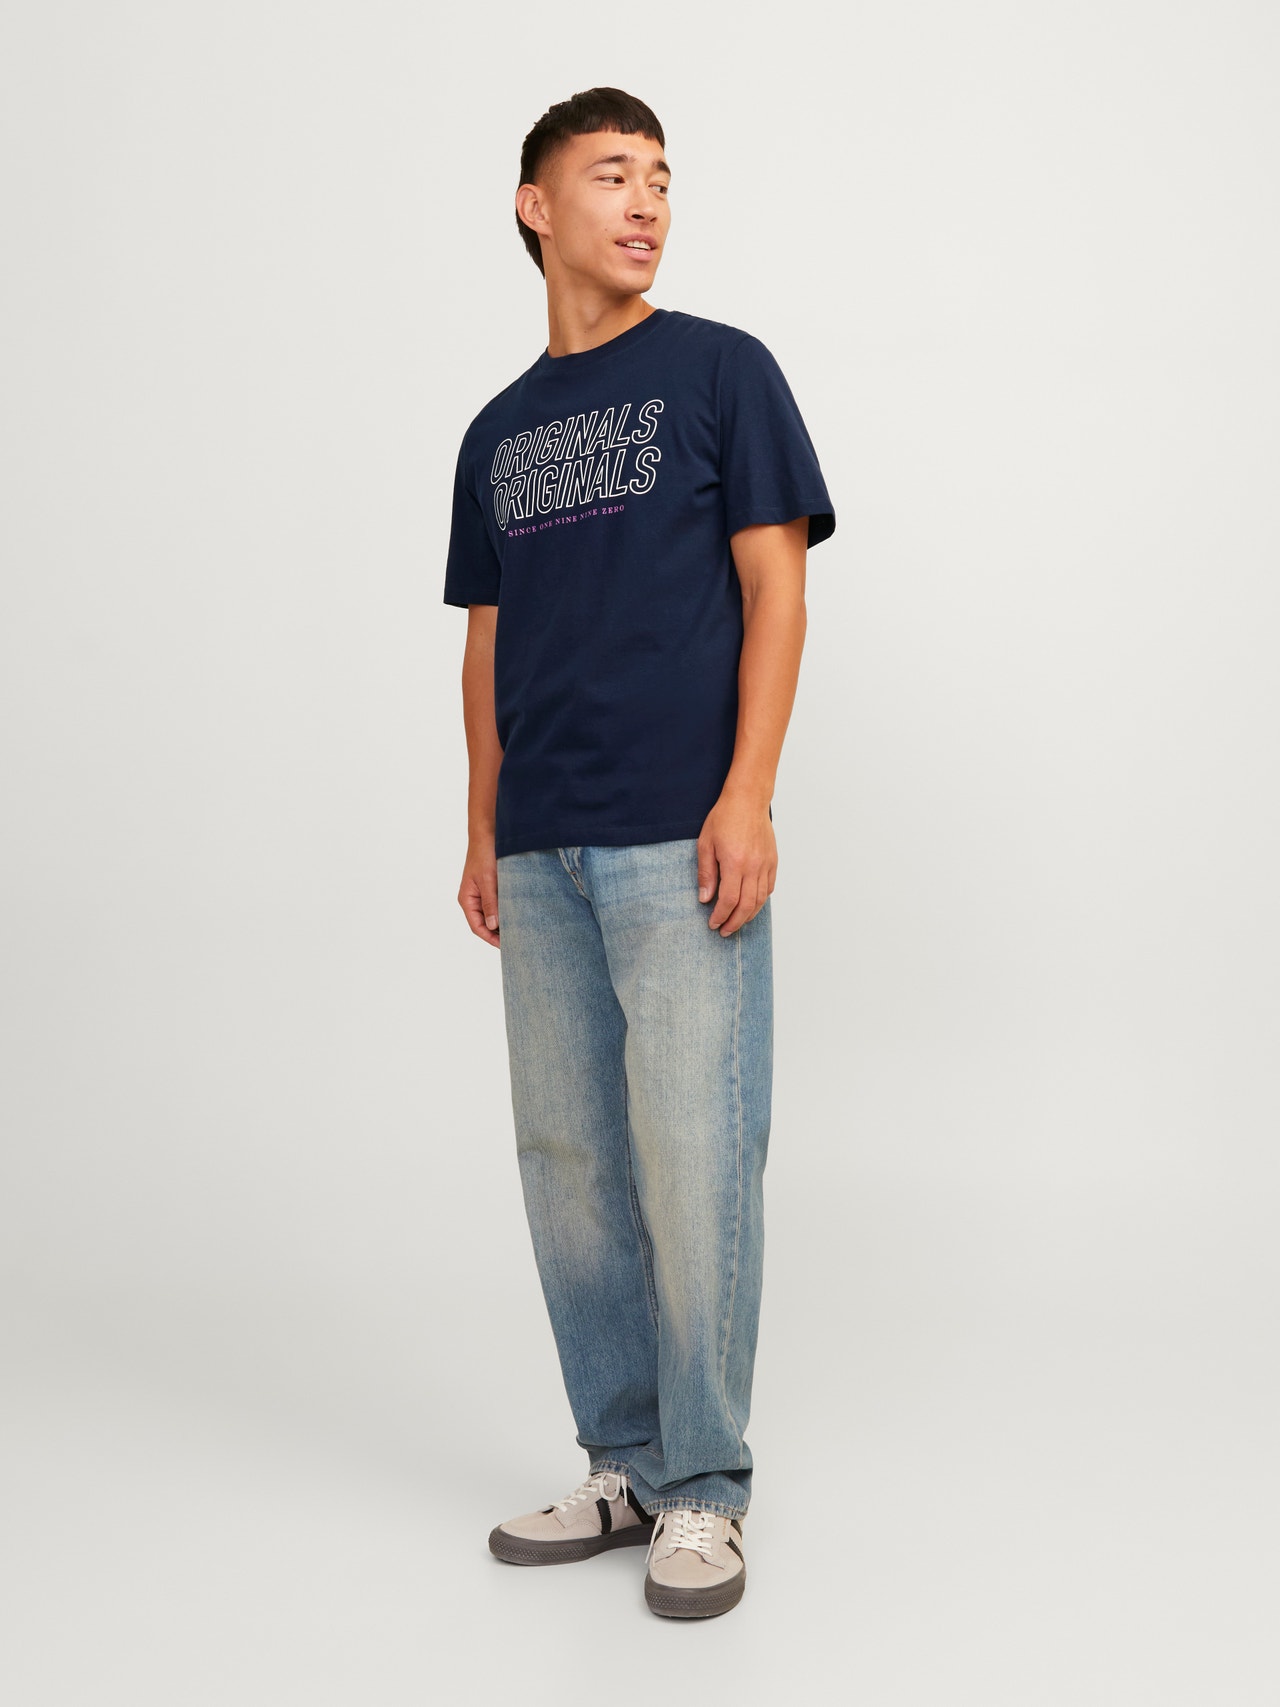 Jack & Jones T-shirt Estampar Decote Redondo -Navy Blazer - 12255078